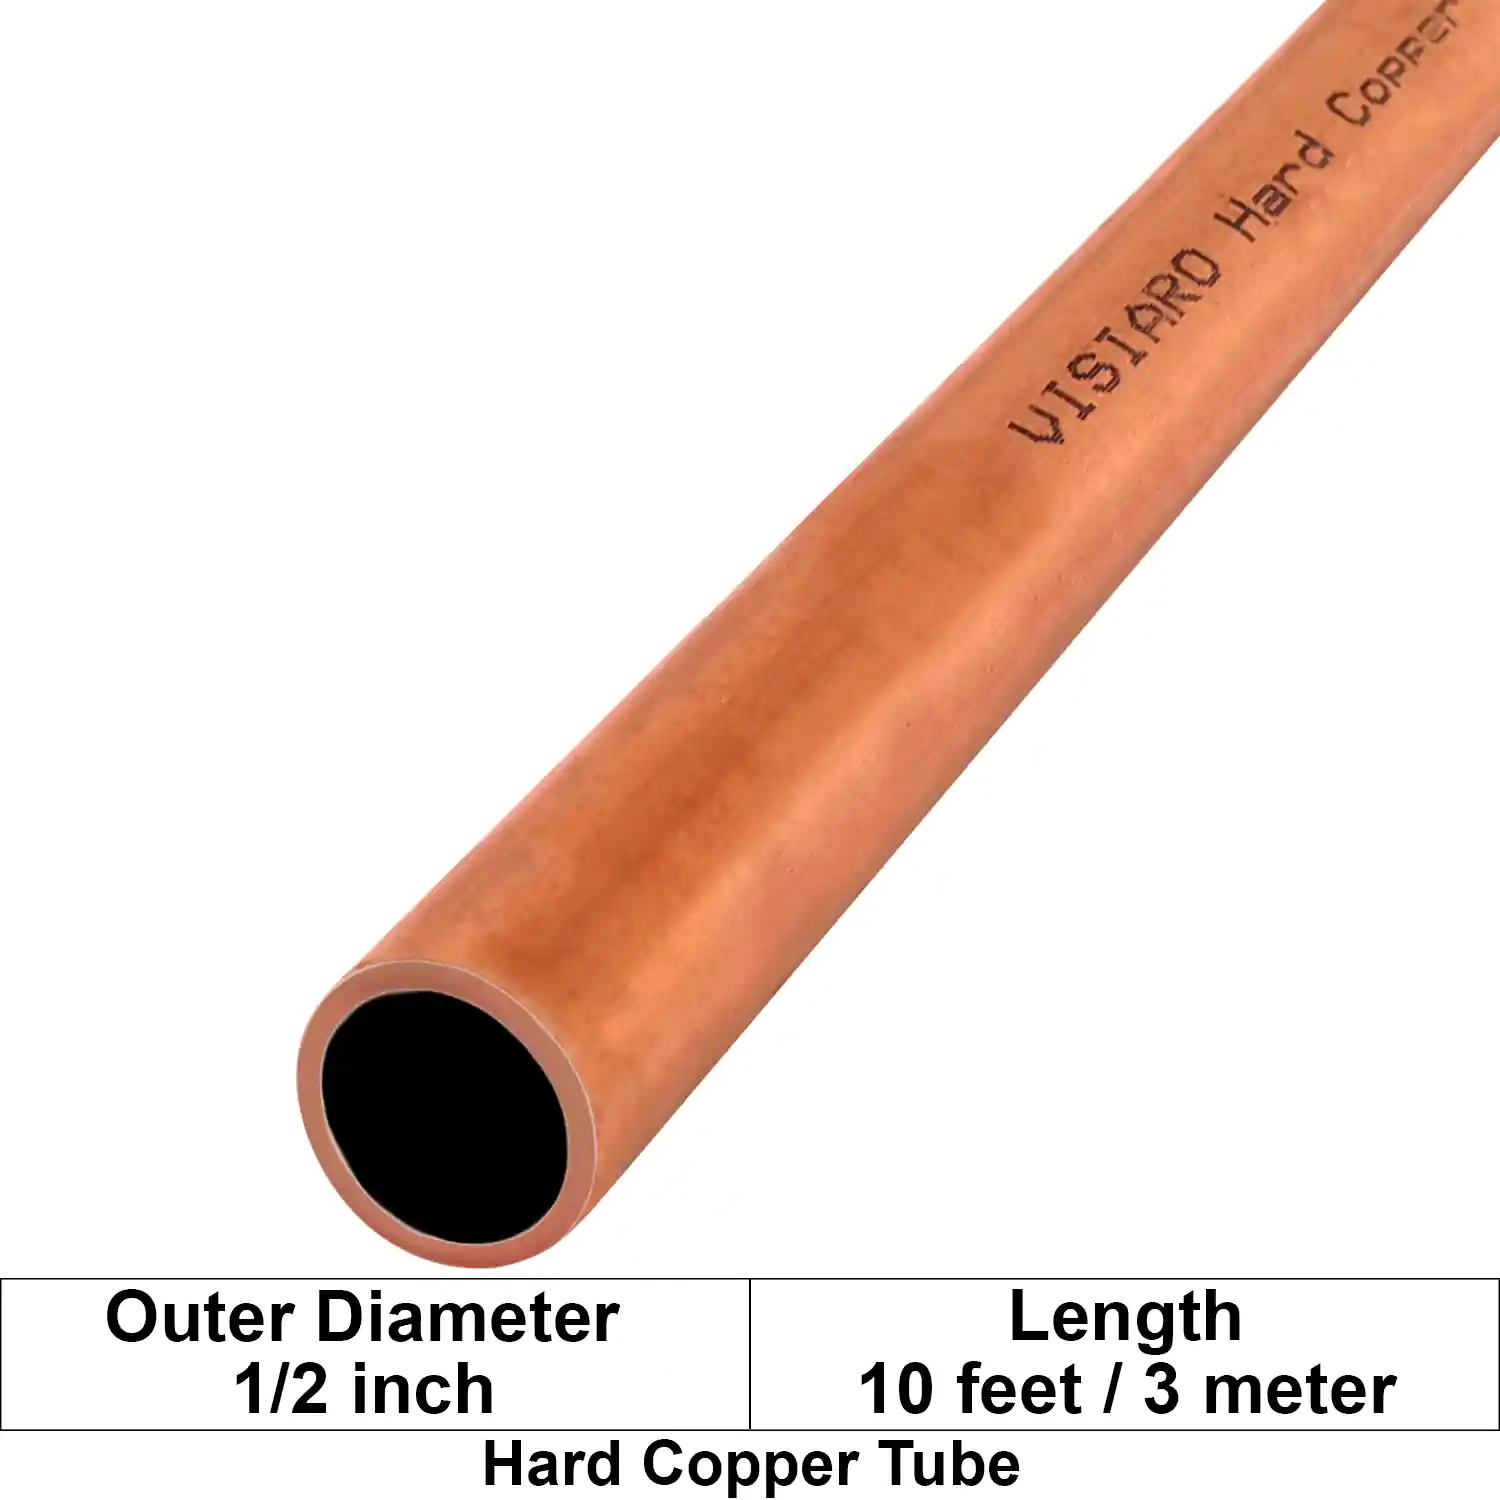 Visiaro Hard Copper Tube 10ft long Outer Diameter - 1/2 inch